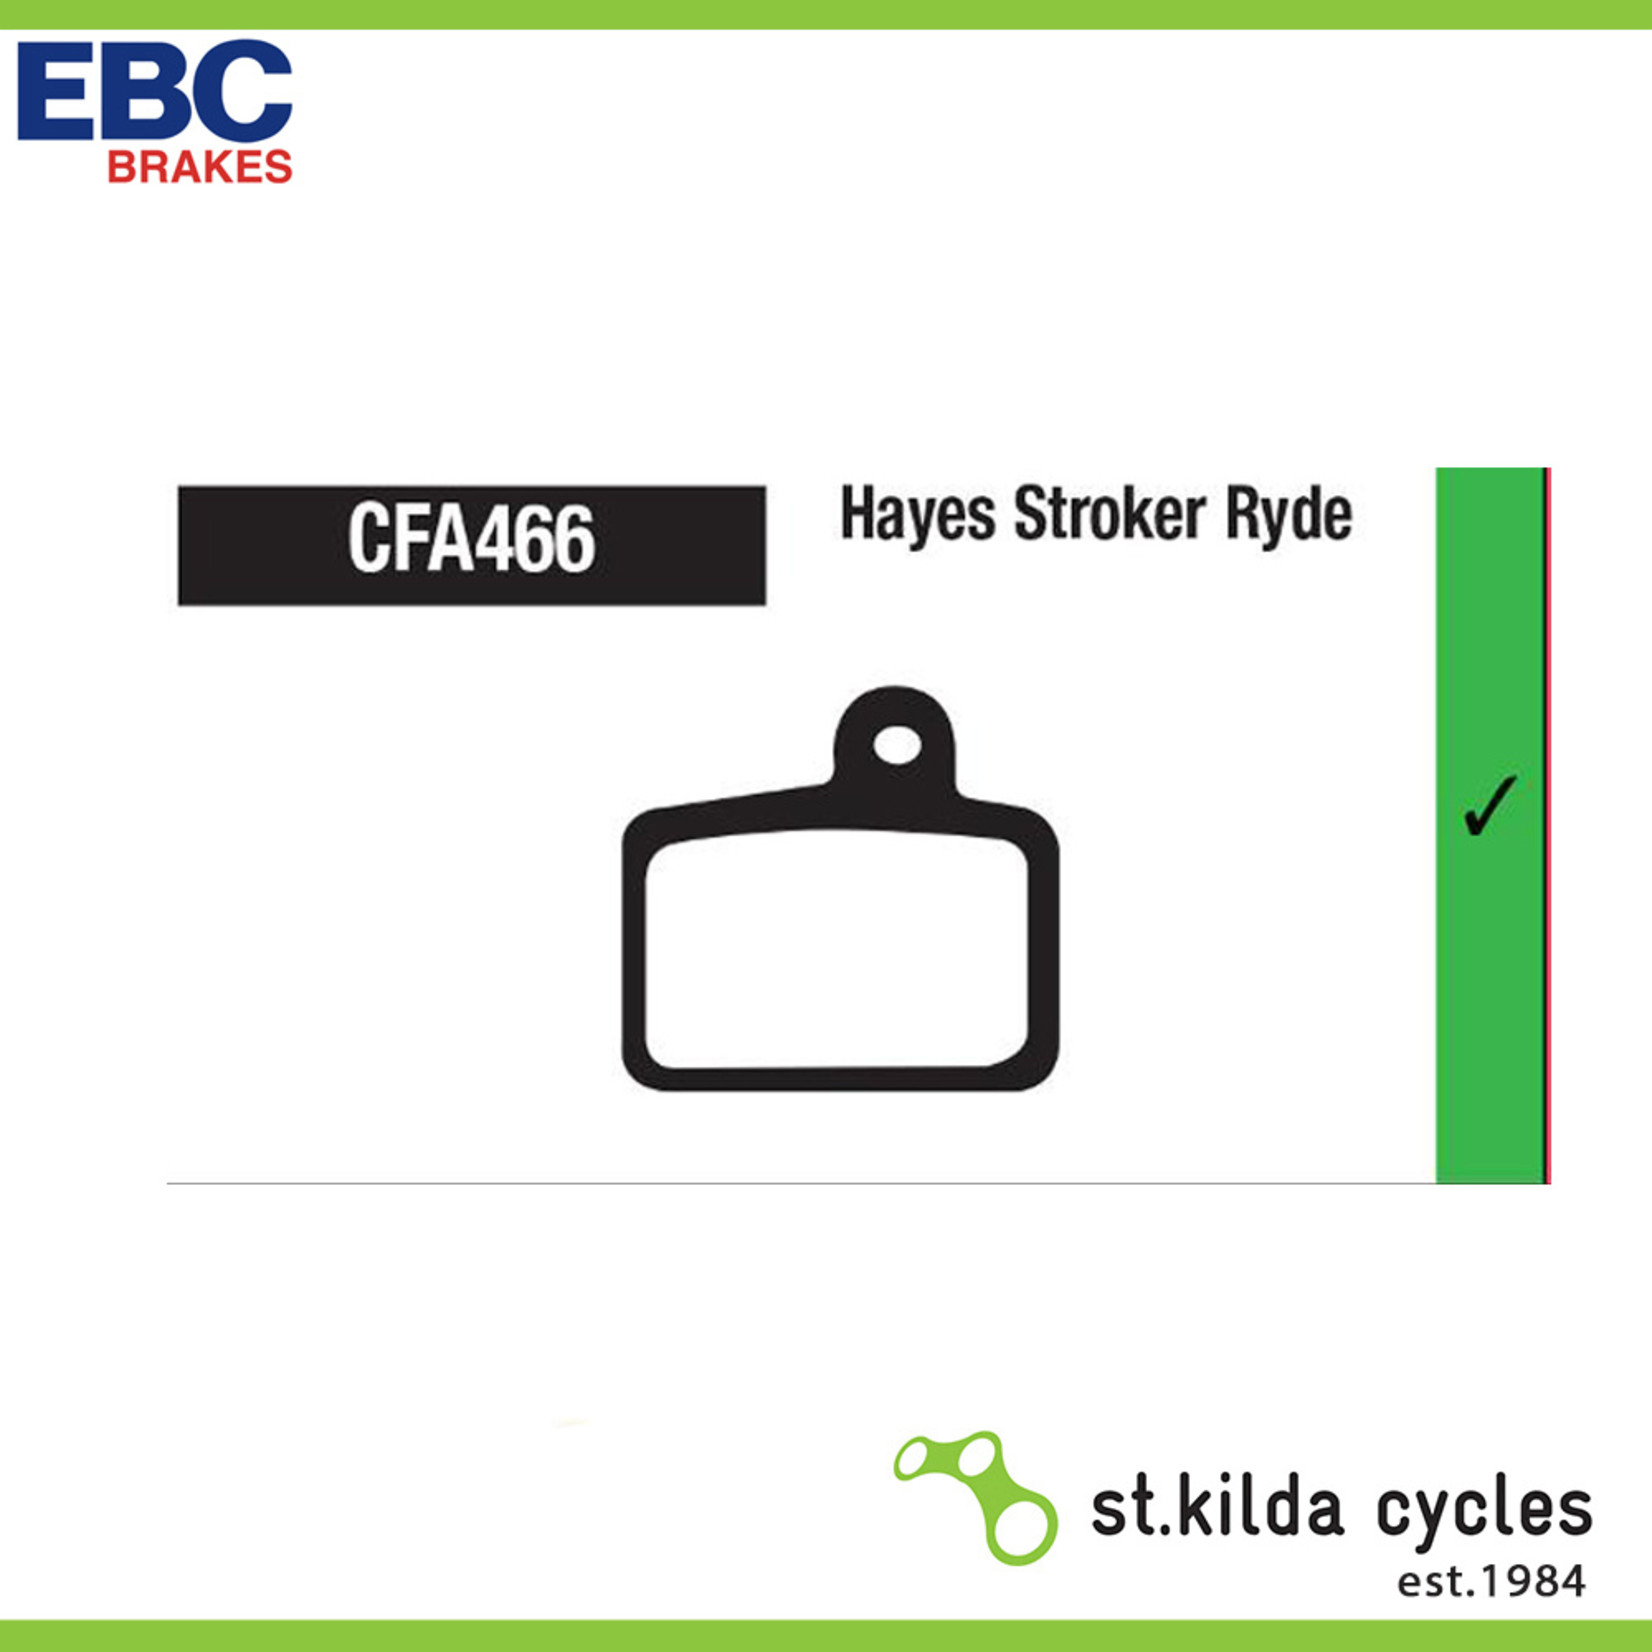 EBC EBC Brake Pad - 466G Hayes Stroker Ryde Green Compound